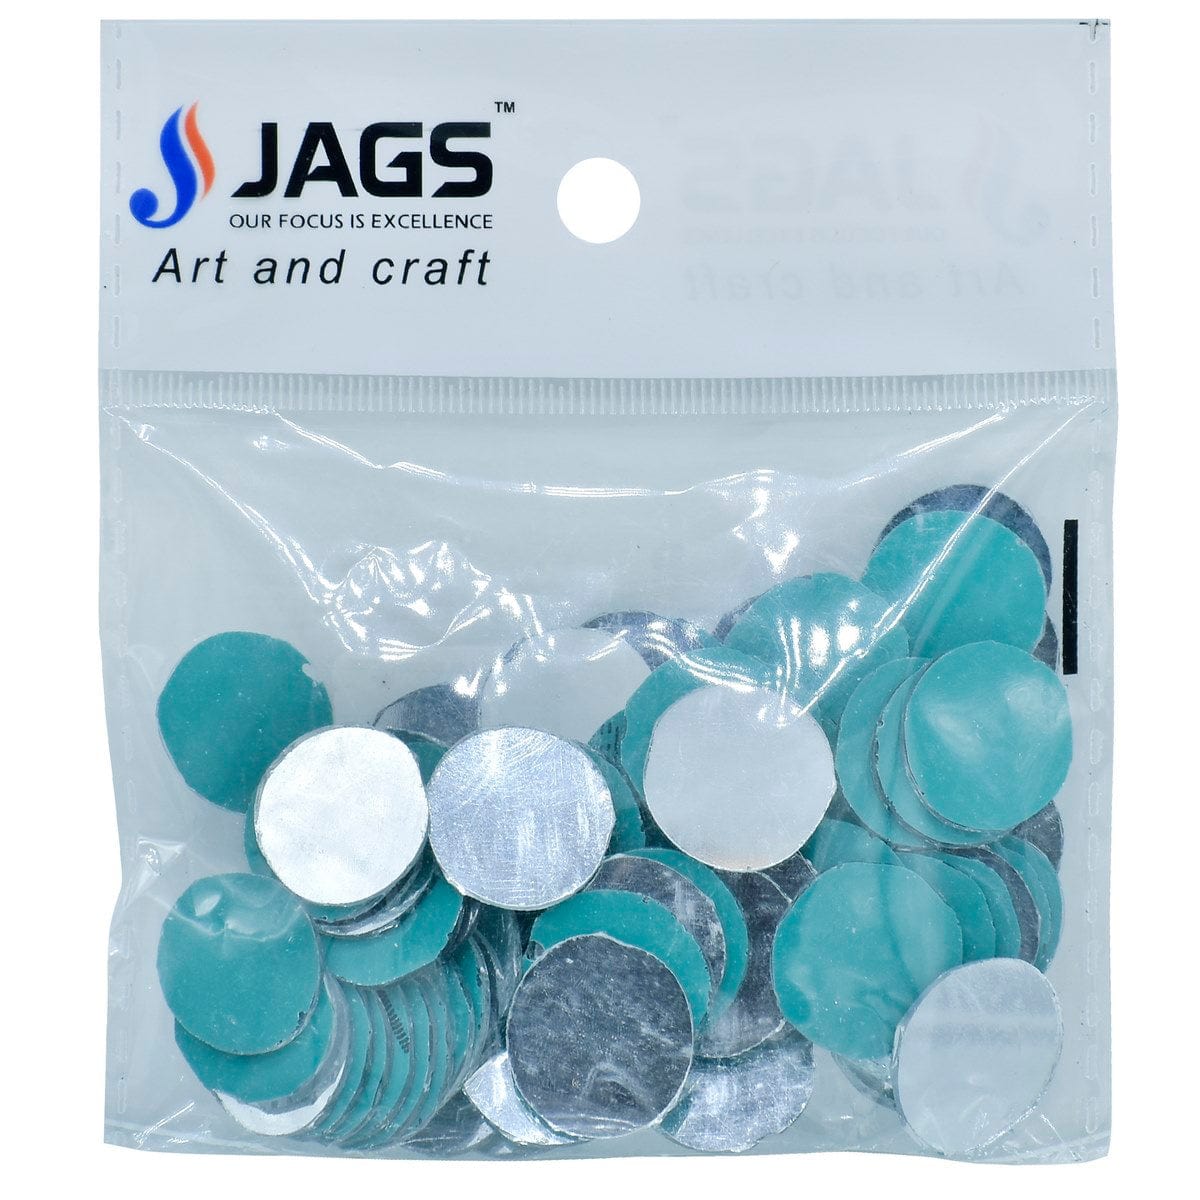 jags-mumbai Lippan Small Glass mirrors for Picchwai Craft & Lippan Craft- Approximately 25 Grams